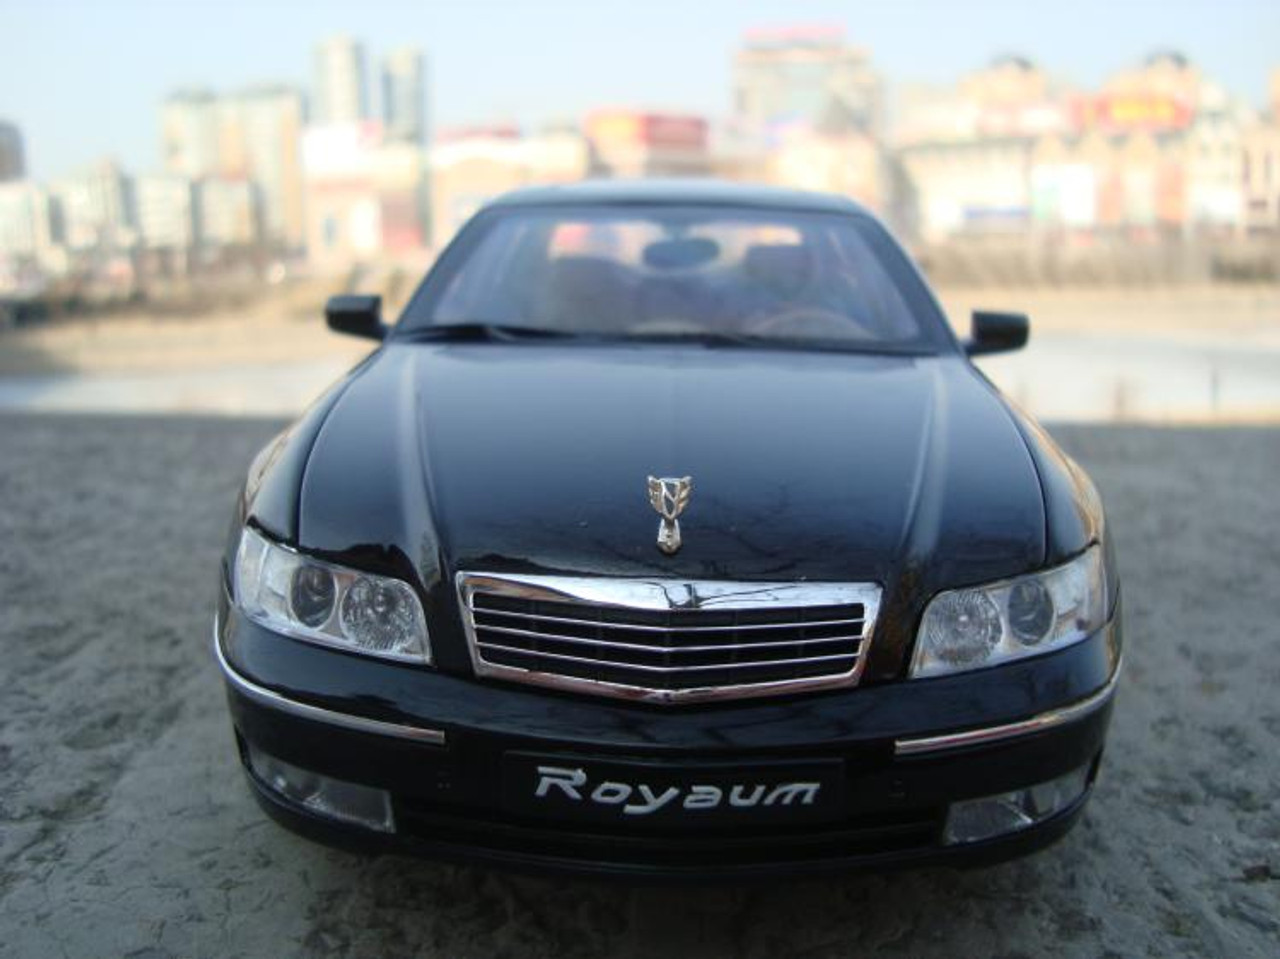 1/18 Dealer Edition Buick Royaum (Black) Diecast Car Model